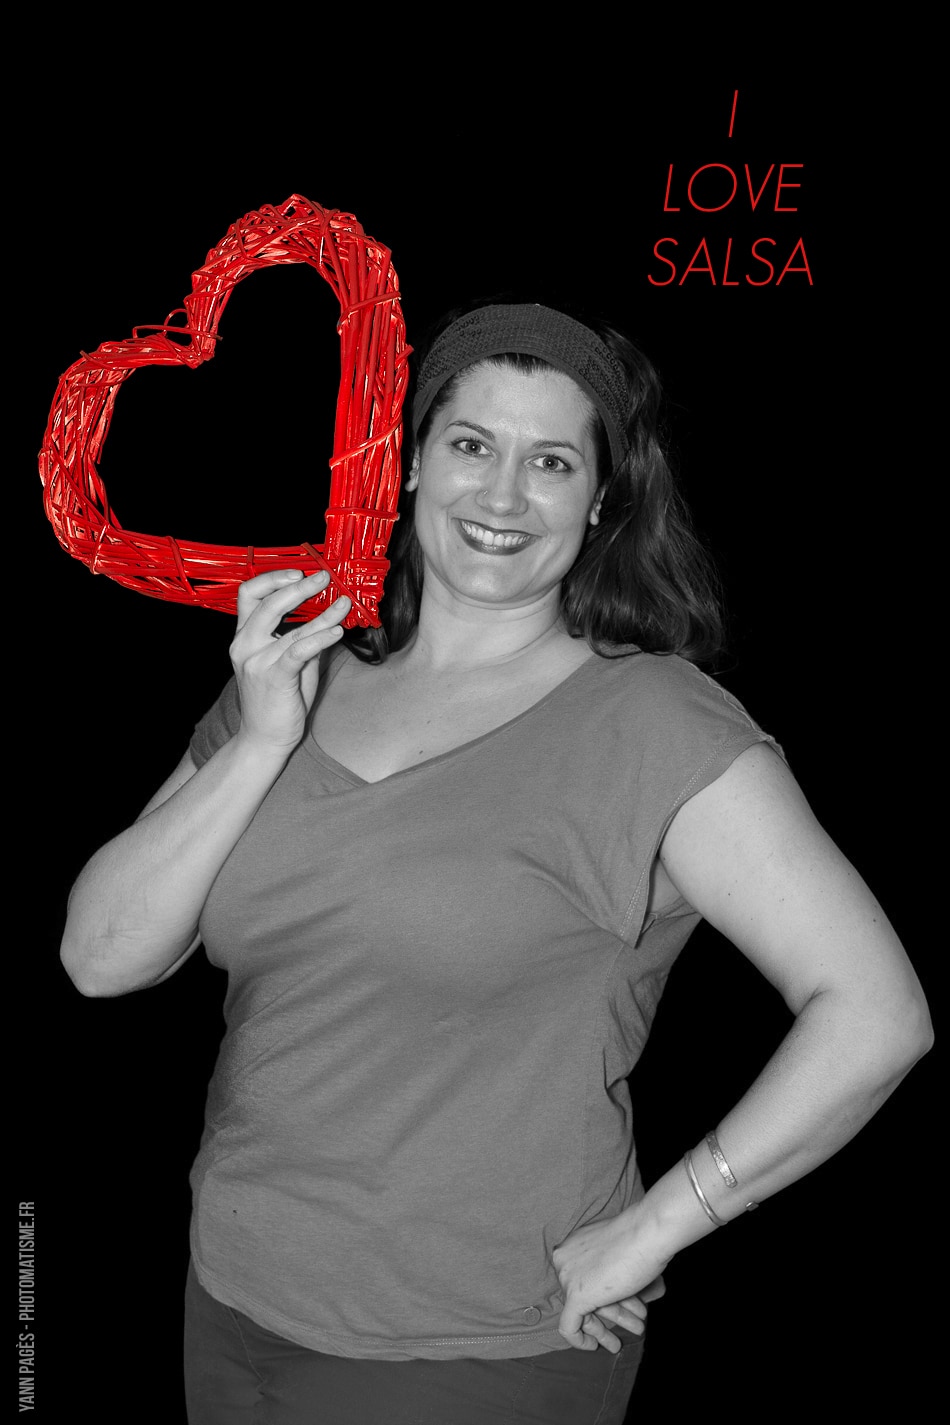 We love salsa